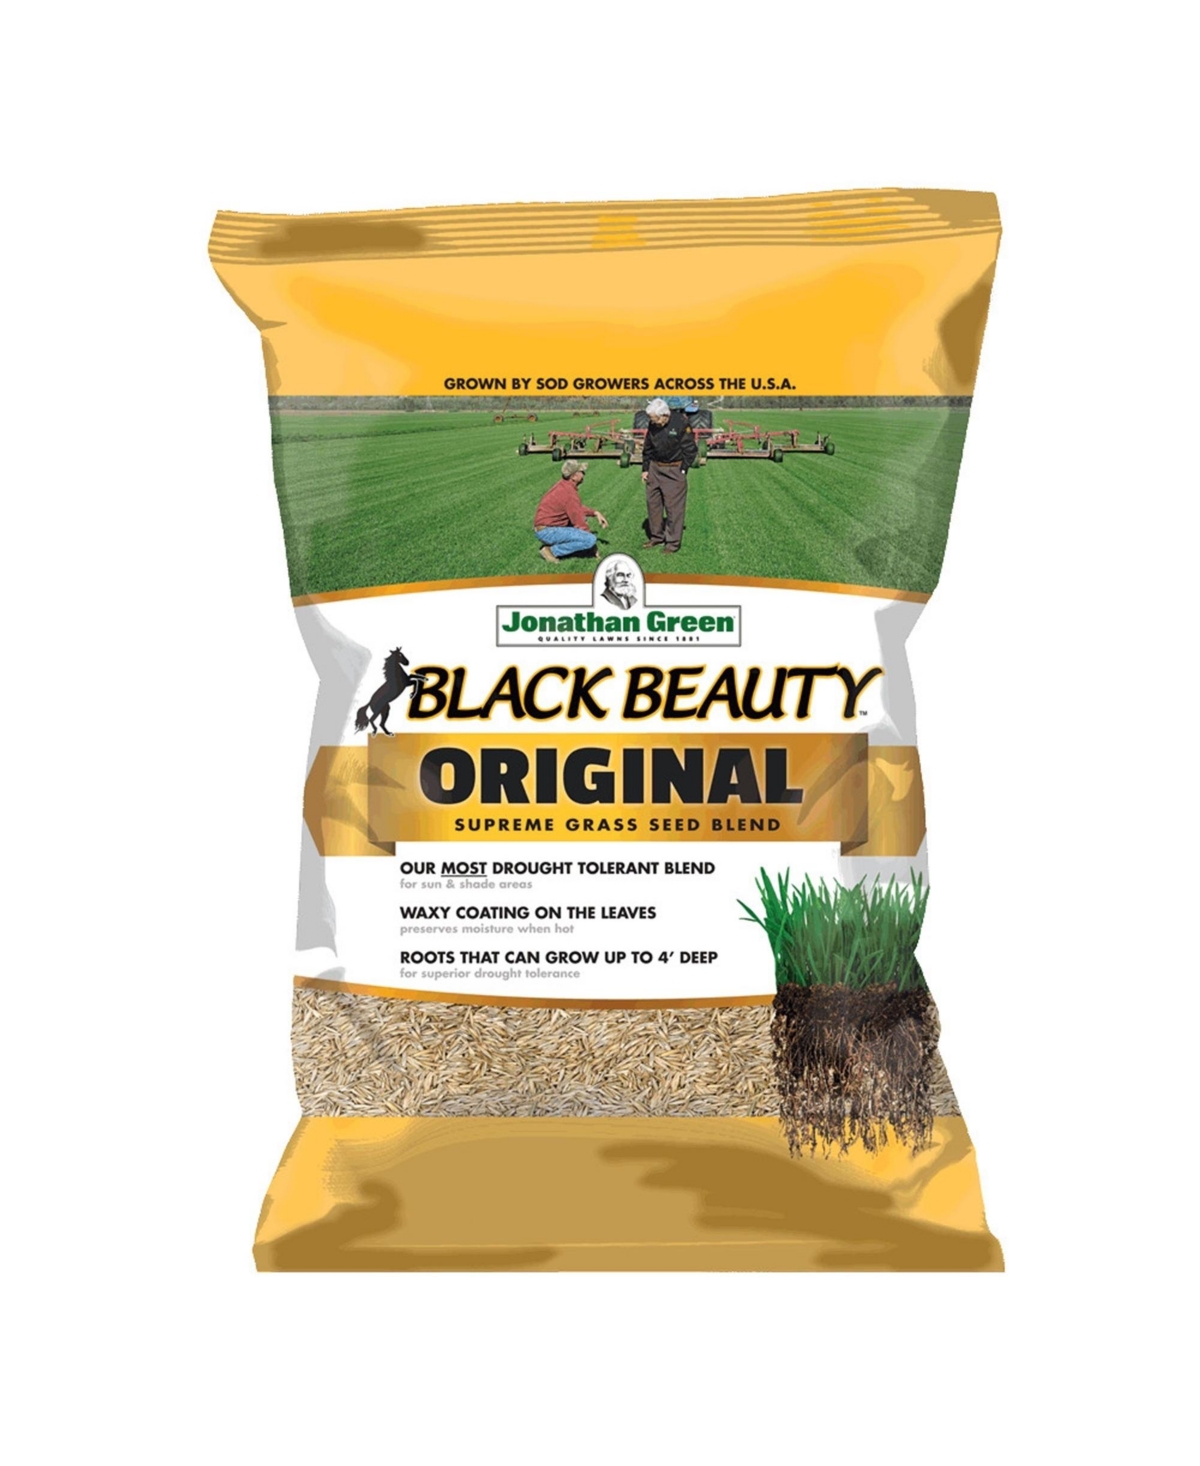 (#10317) Black Beauty Original Grass Seed, 15 lb bag - Brown